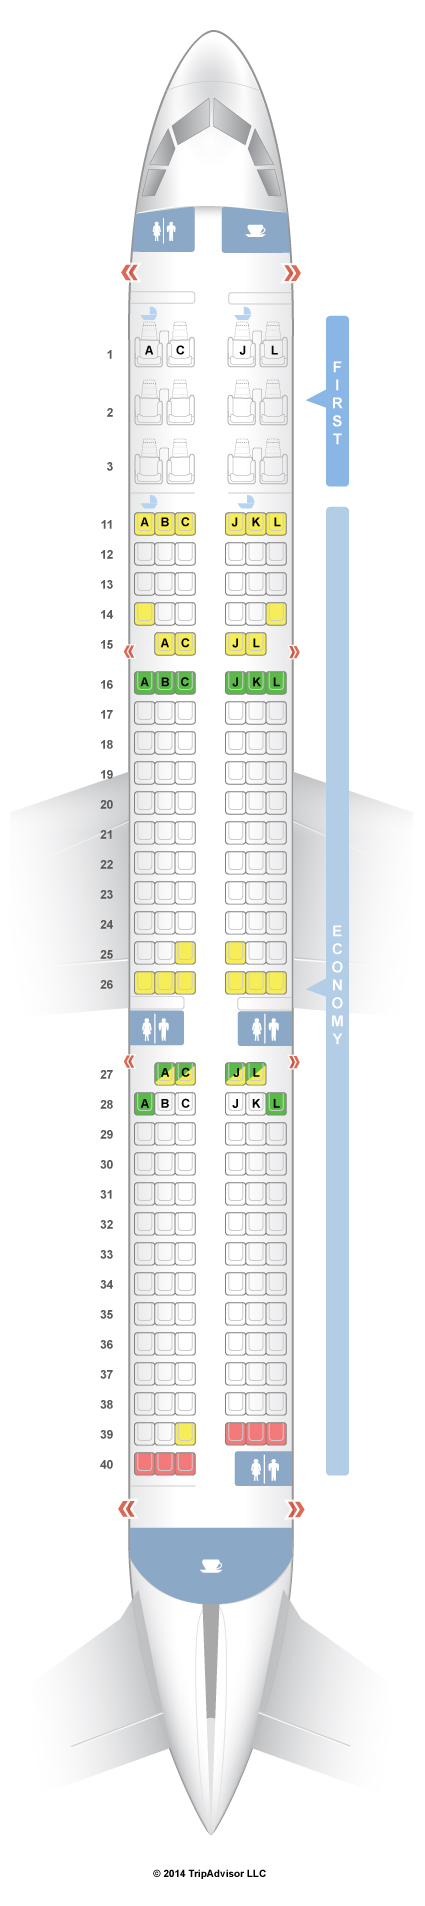 SeatGuru Seat Map Air China Airbus A321 (321) Layout 1